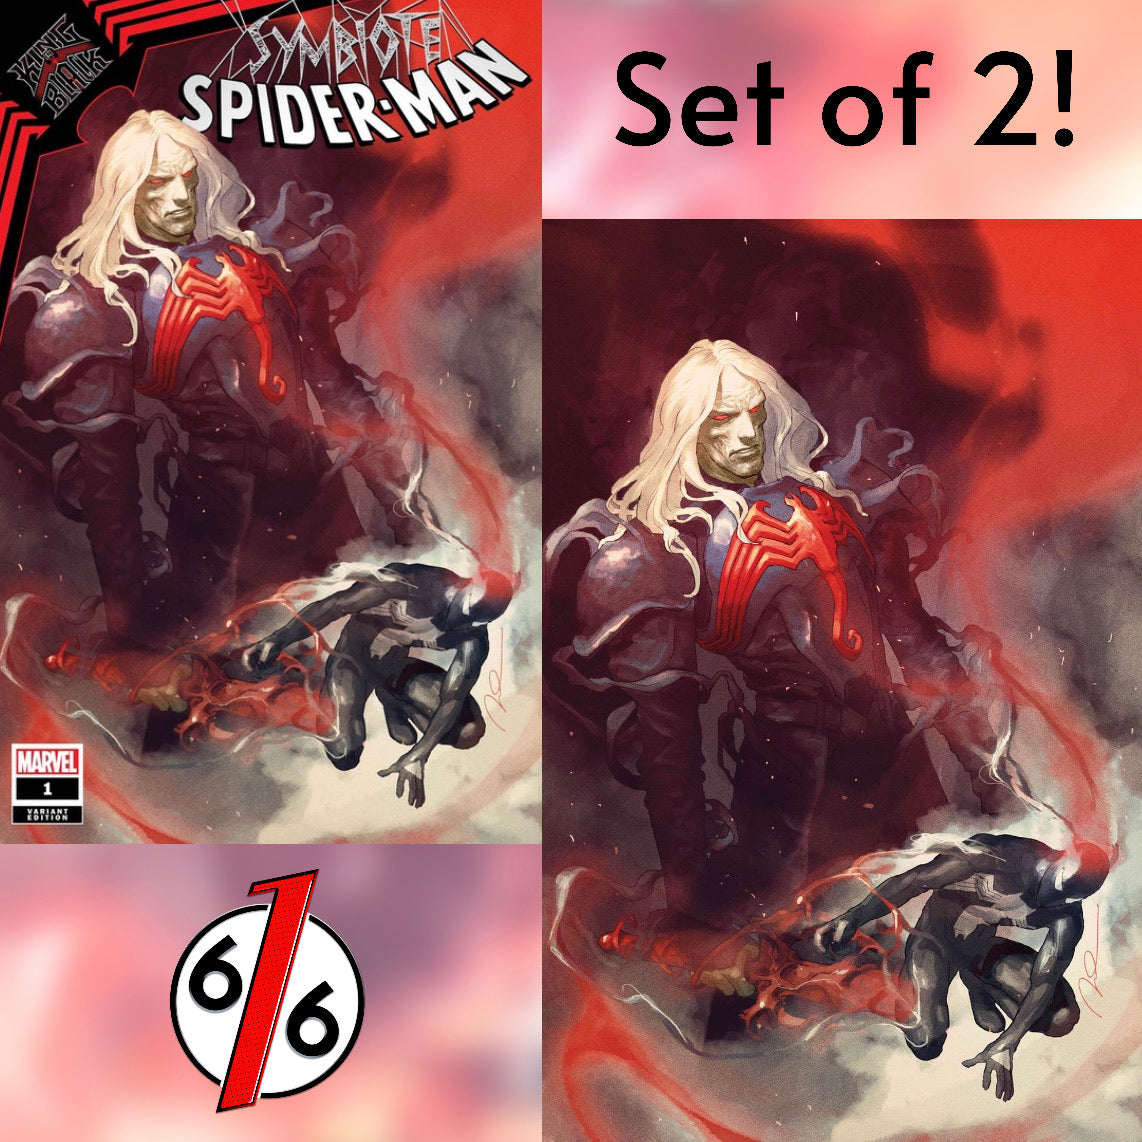 SYMBIOTE SPIDER-MAN KING IN BLACK #1 SET OF 2 GERALD PAREL Variants